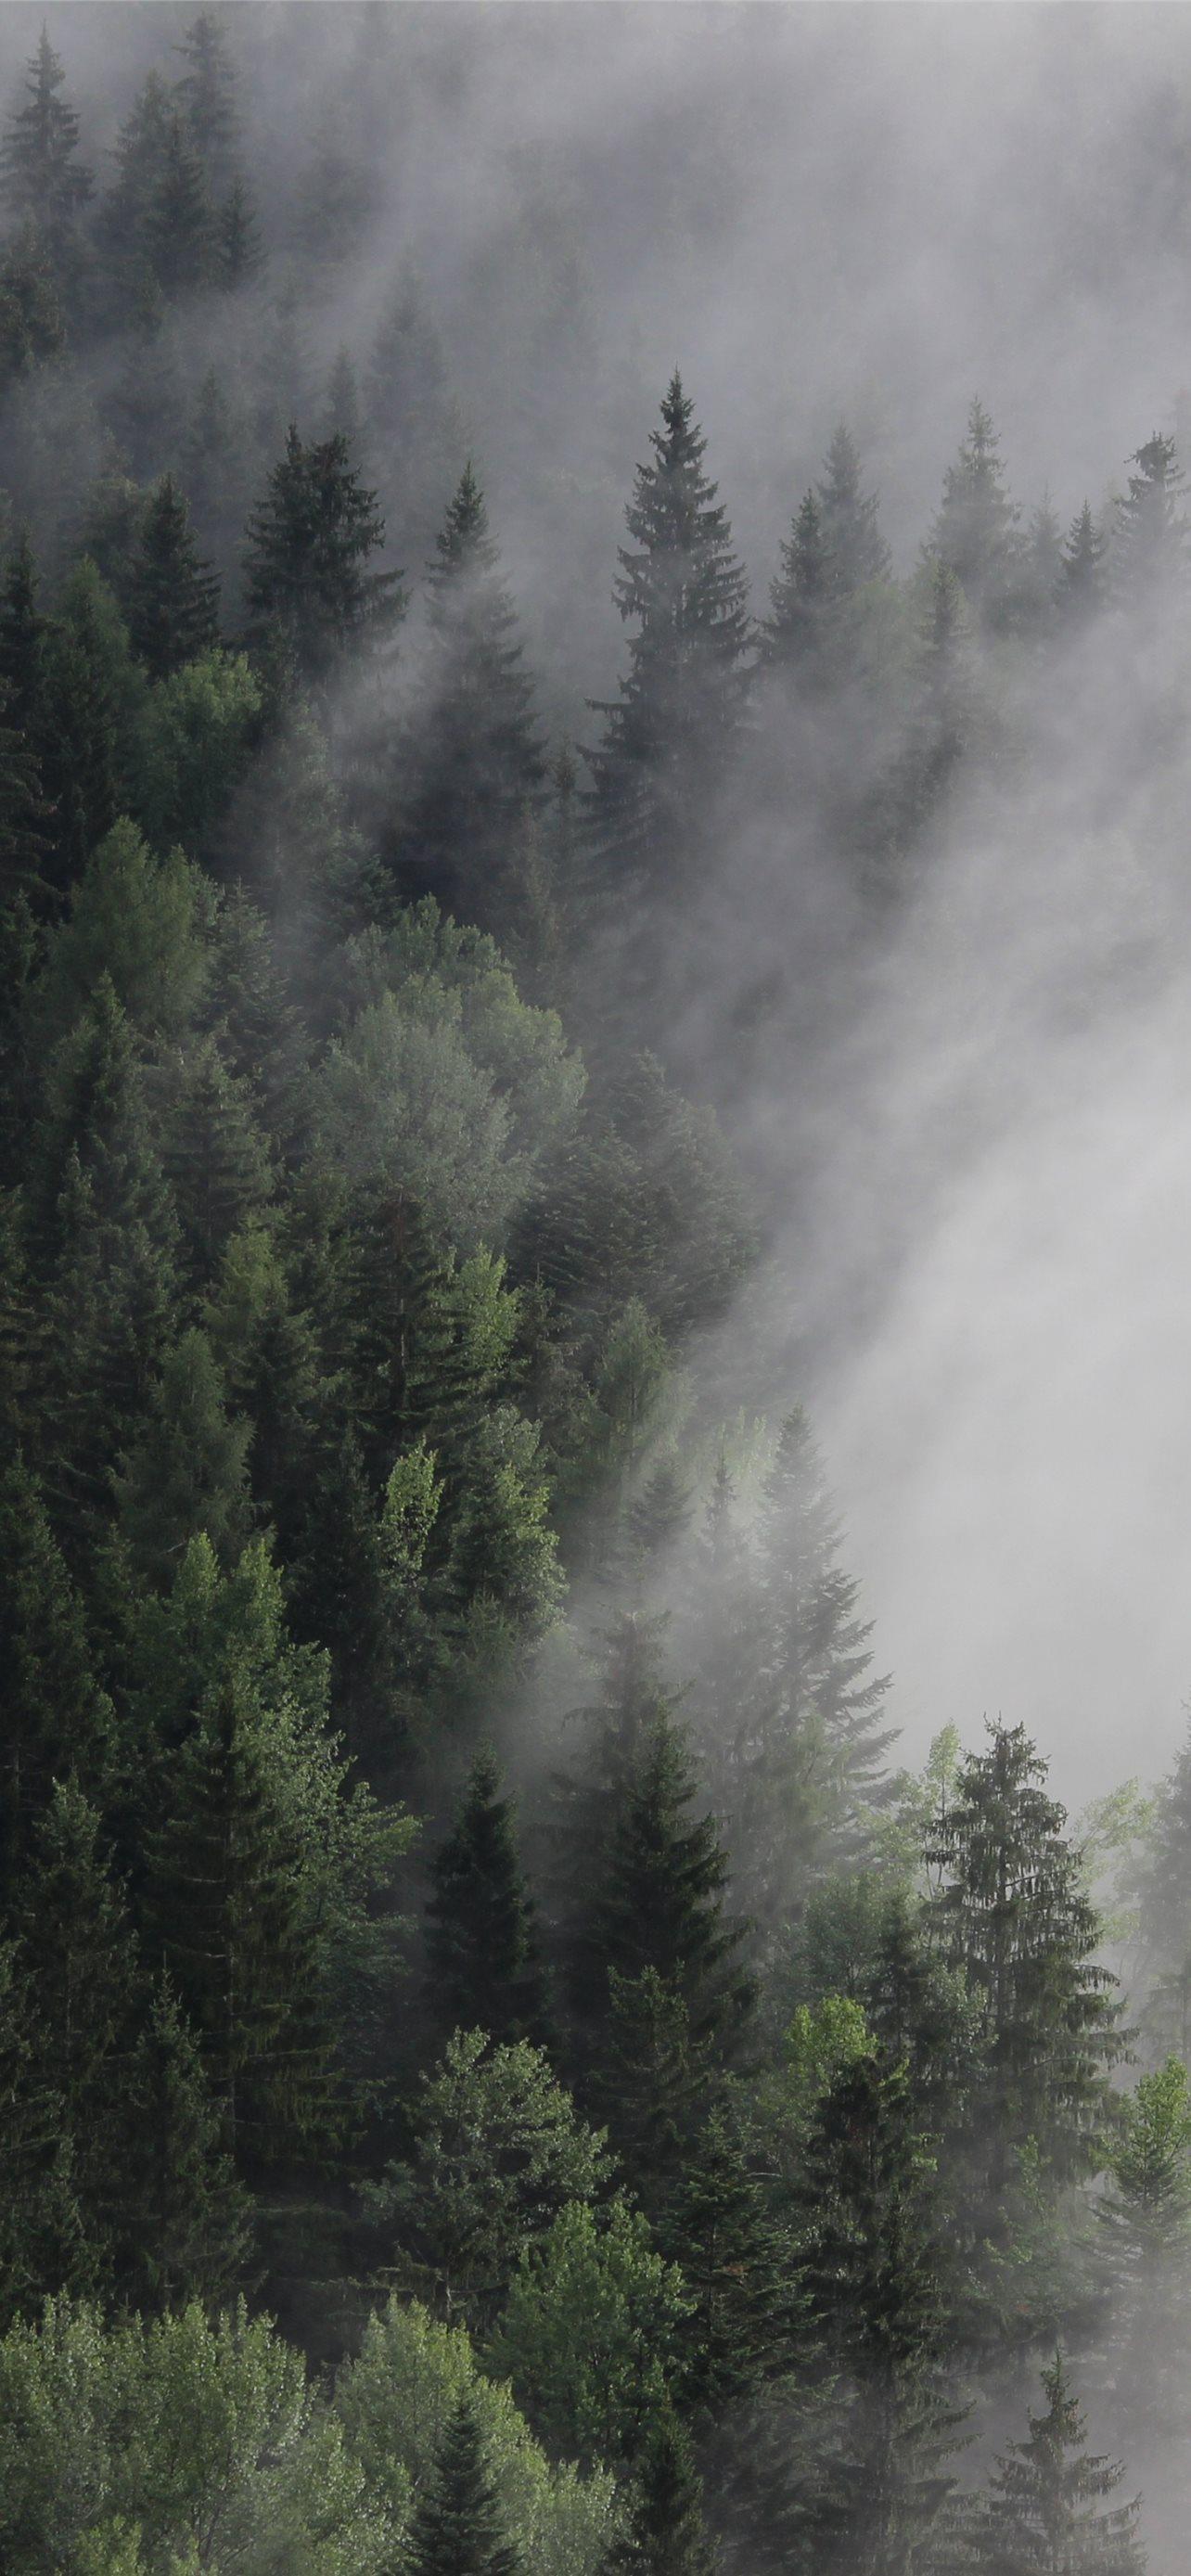 Austria 4k 5k 8k Forest Fog Mist Pines Nature iPhone Wallpaper